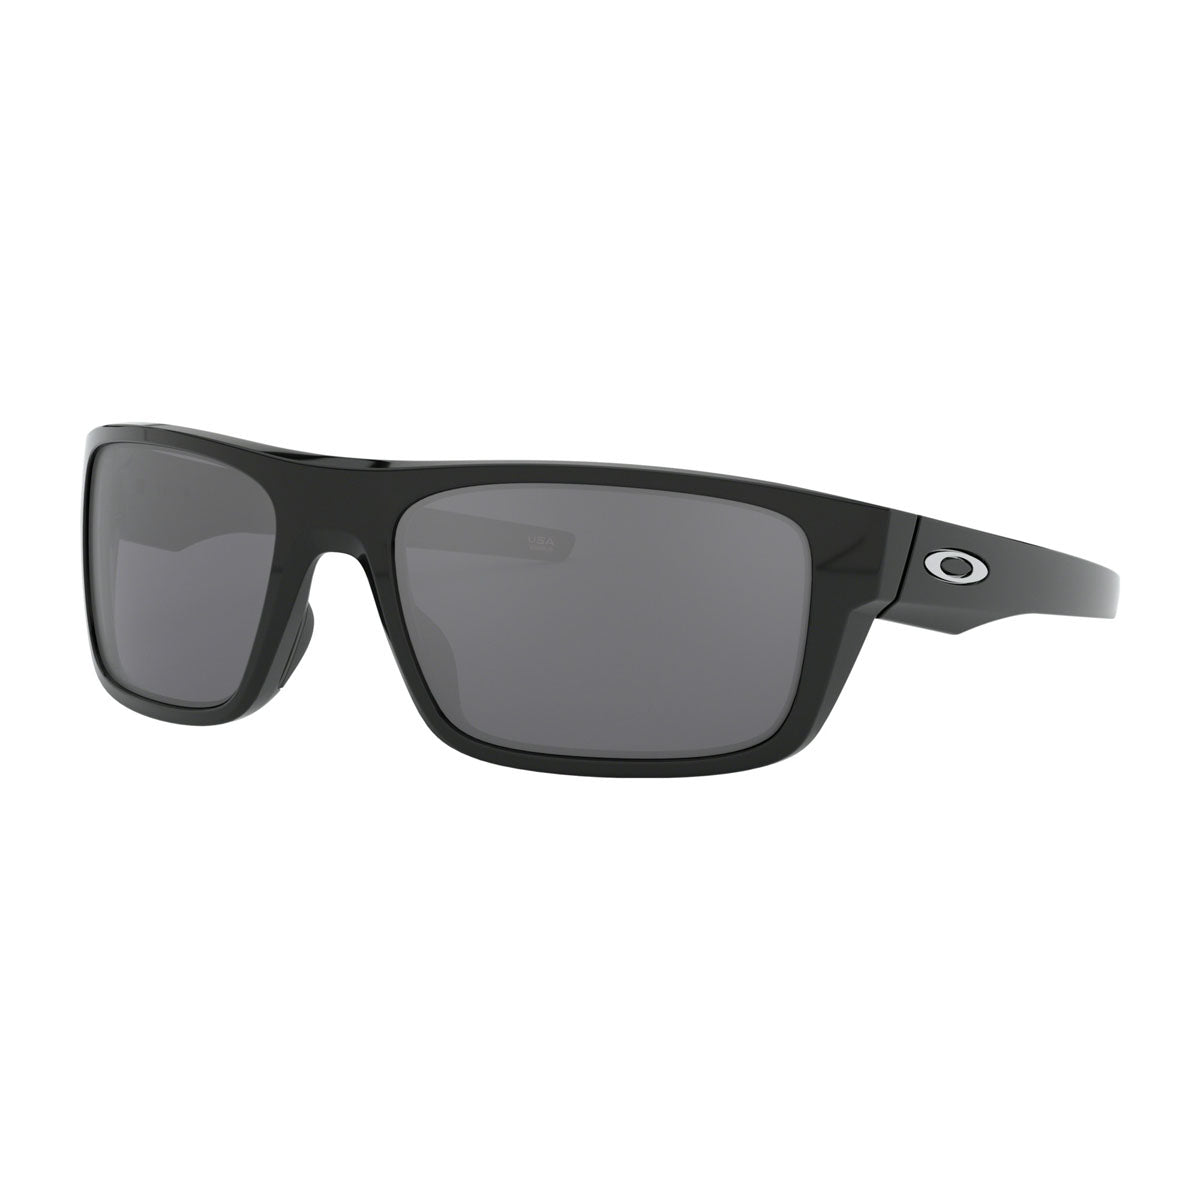 Oakley Drop Point Sunglasses - Polished Black / Black Iridium Lens - OO9367-0260